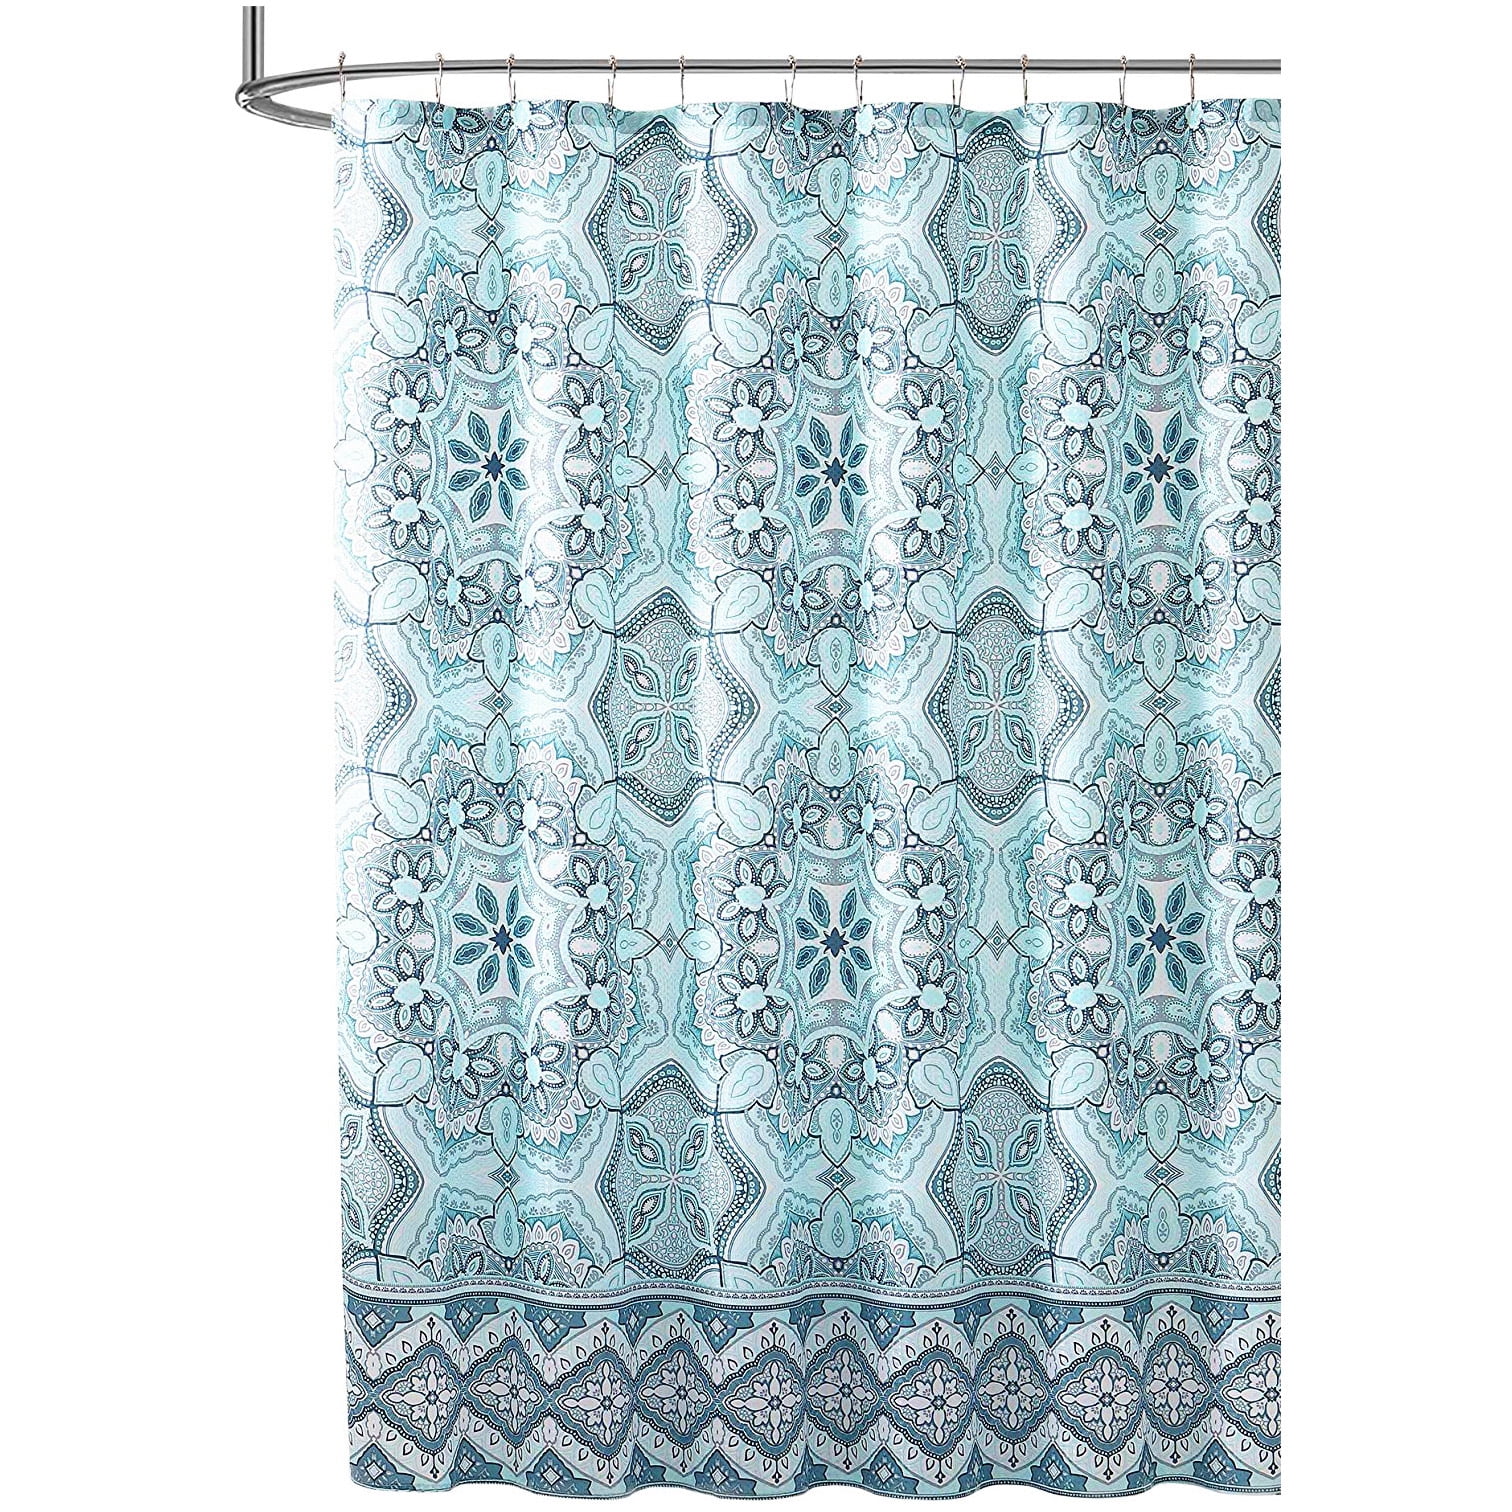 72x72'' Blue Damask Mandala Bathroom Waterproof Fabric Shower Curtain & Bath Mat 